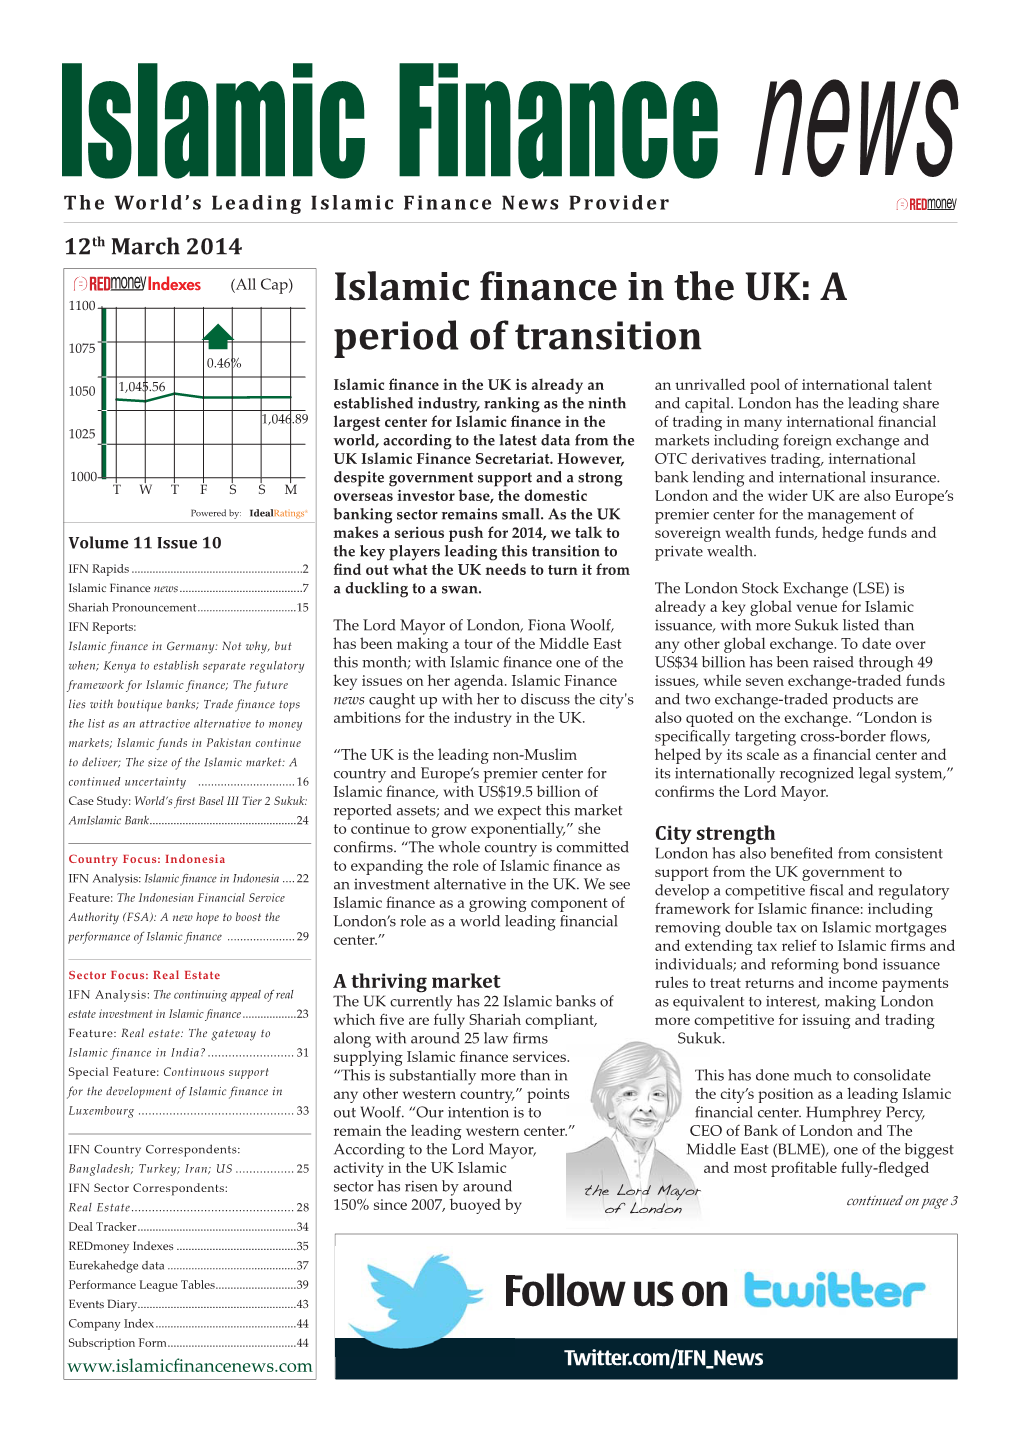 Islamic Finance in the UK: A